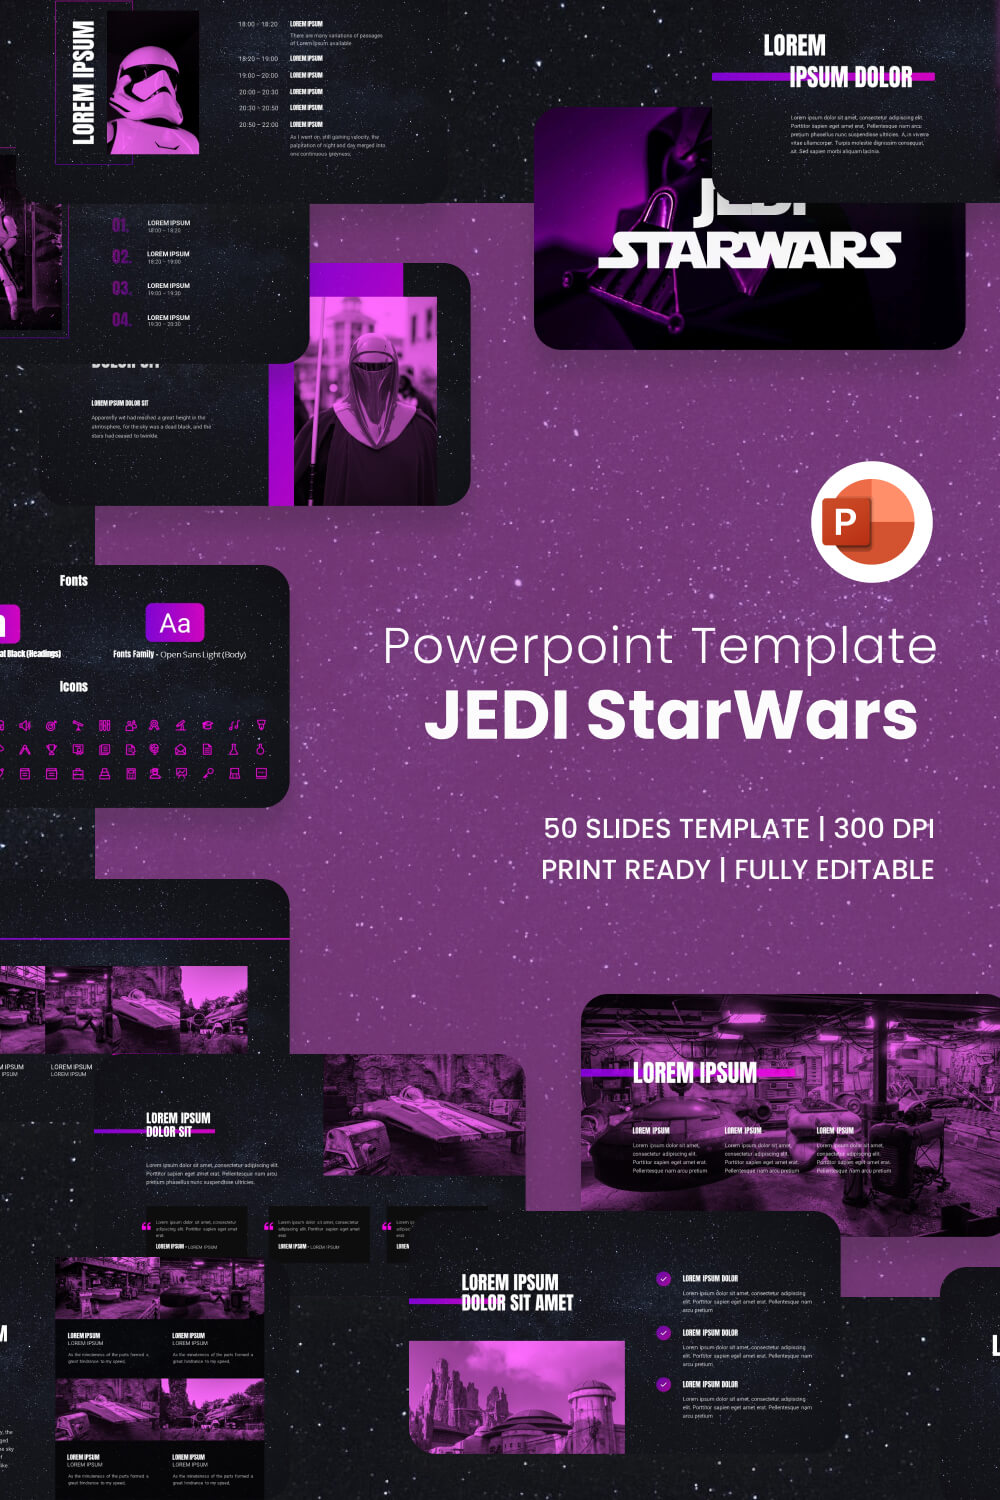 JEDI StarWars PowerPoint Template pinterest image.